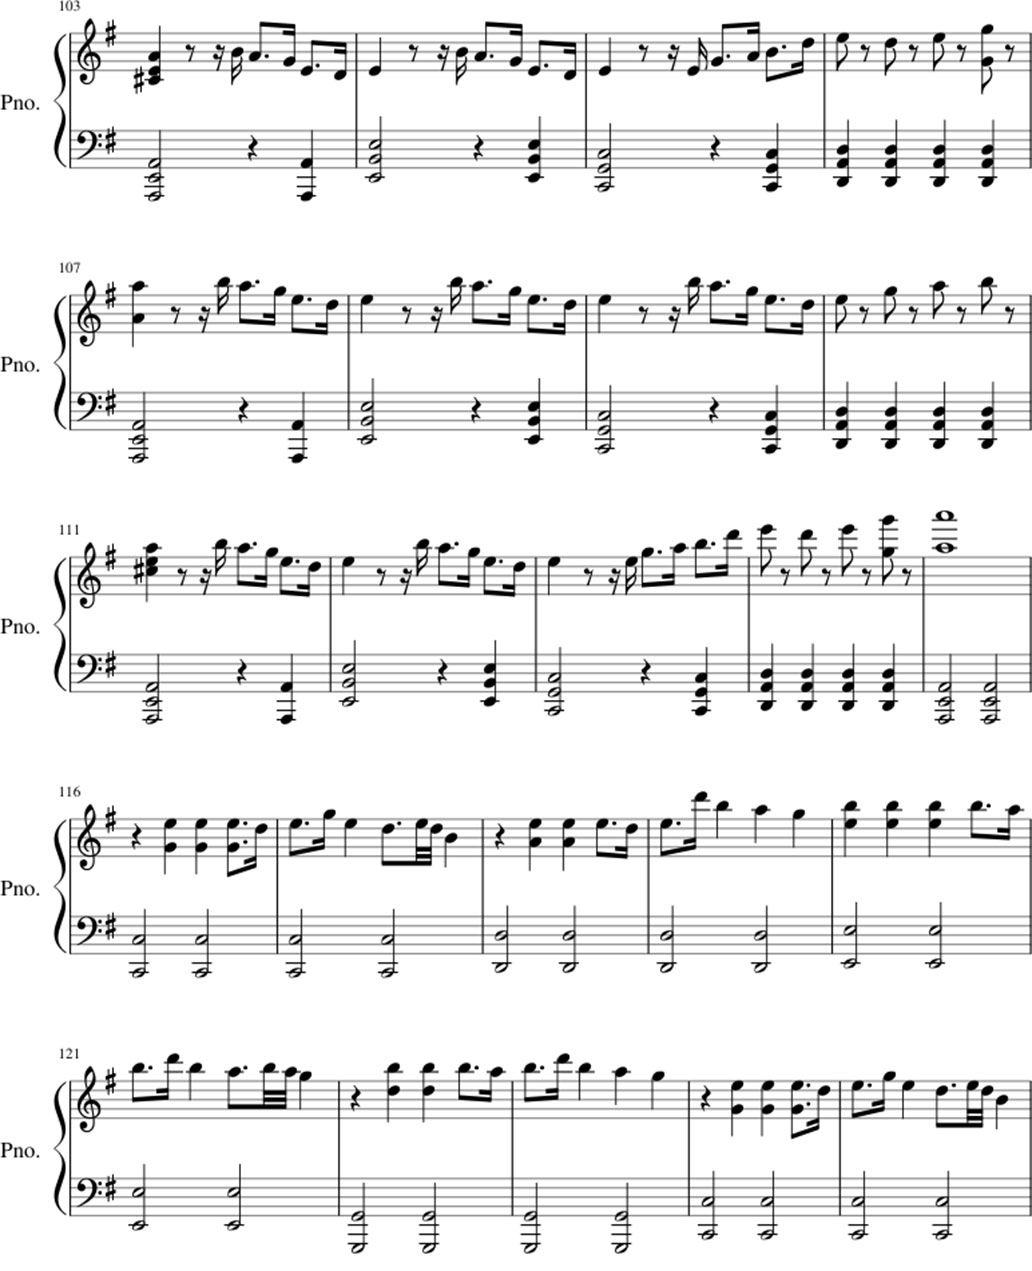 Unity sheet music notes 5